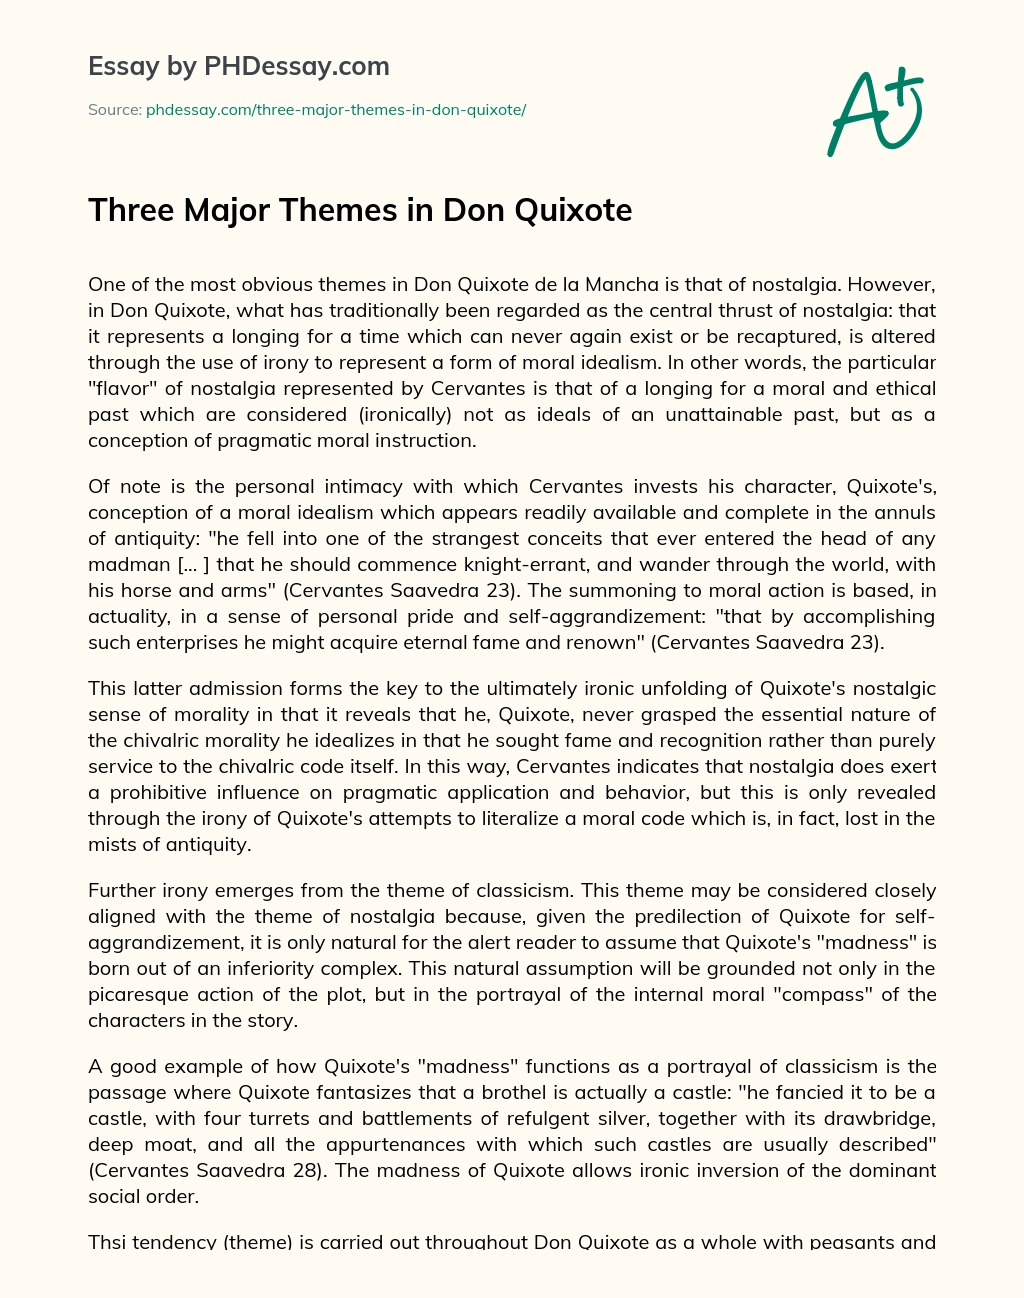 Three Major Themes in Don Quixote essay